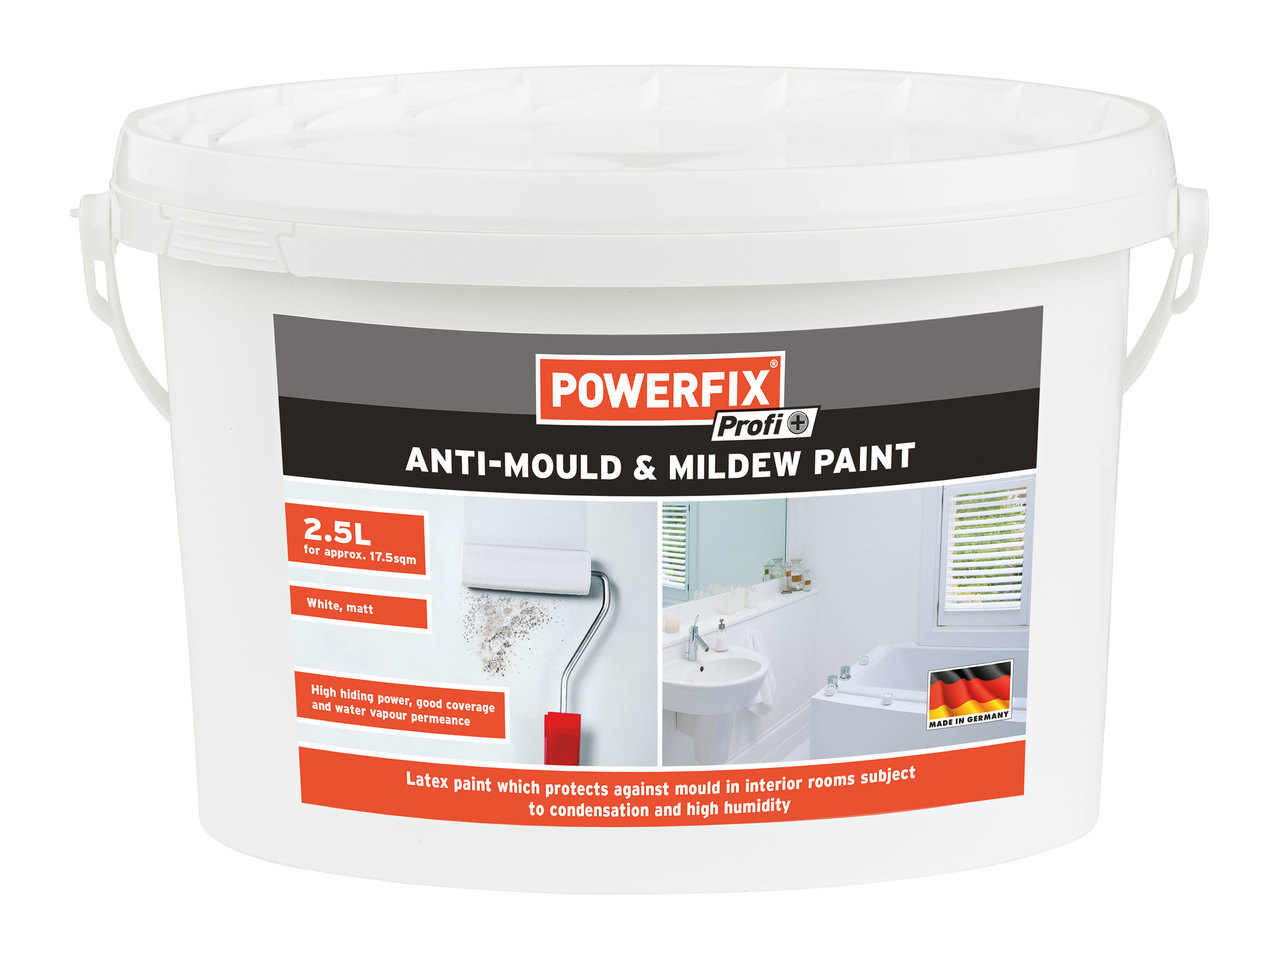 Powerfix Profi Anti-Mould and Mildew Paint1